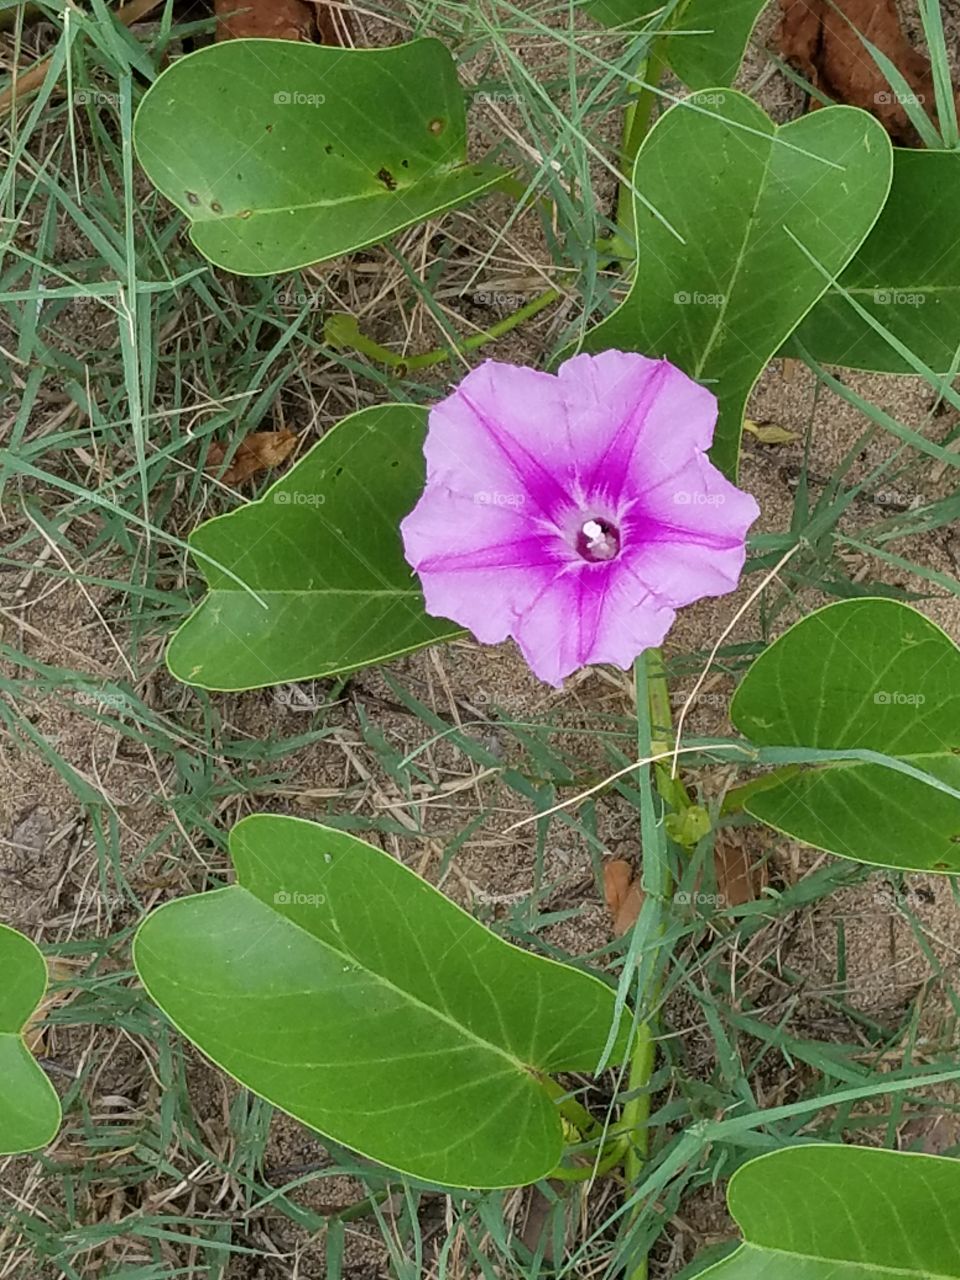 Maui, beach flower